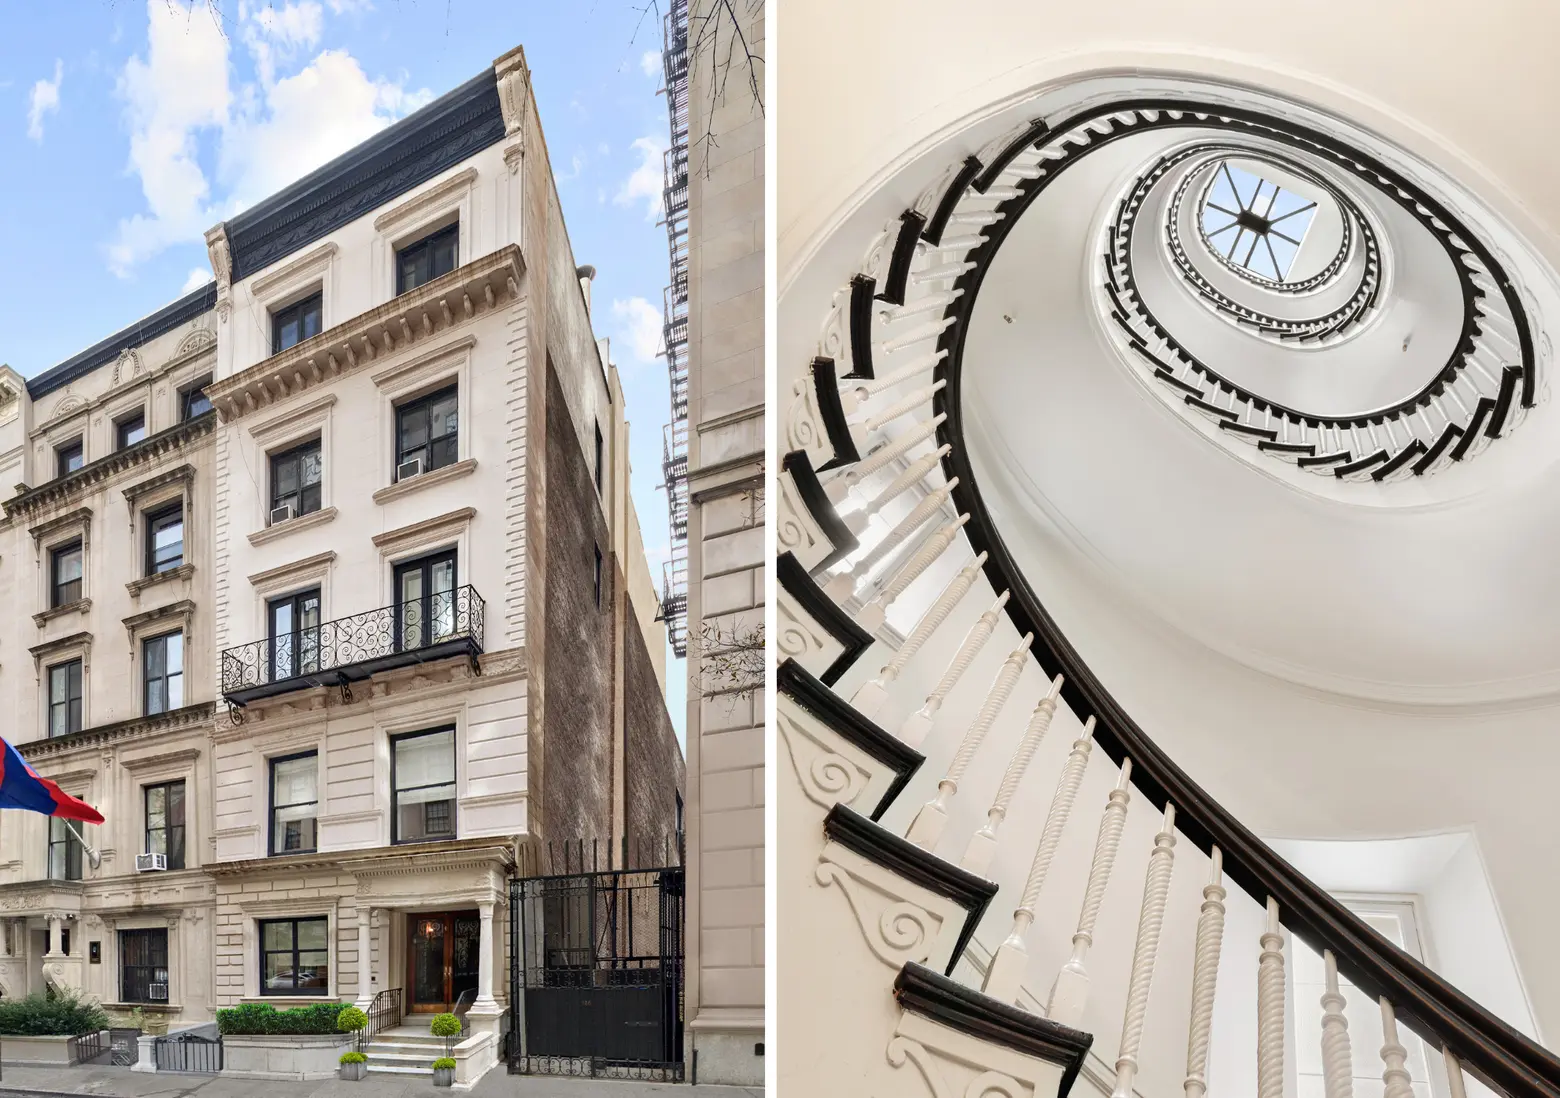 Skyy Vodka founder’s Upper East Side mansion with major art ties asks $25M